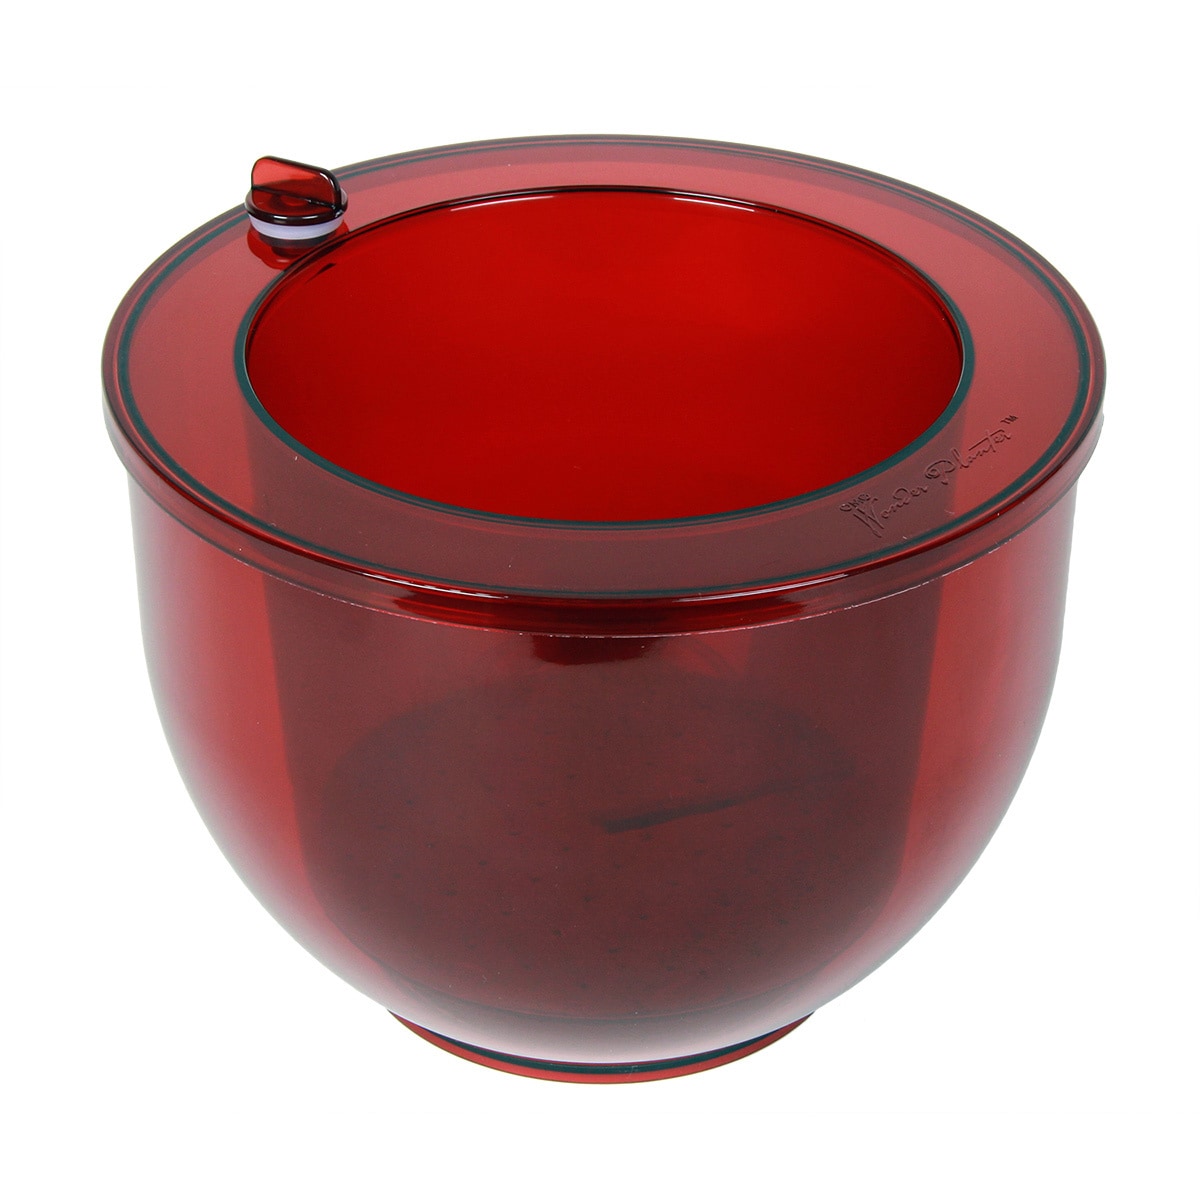 Jars Accent Pieces Buy Decorative Accessories Online